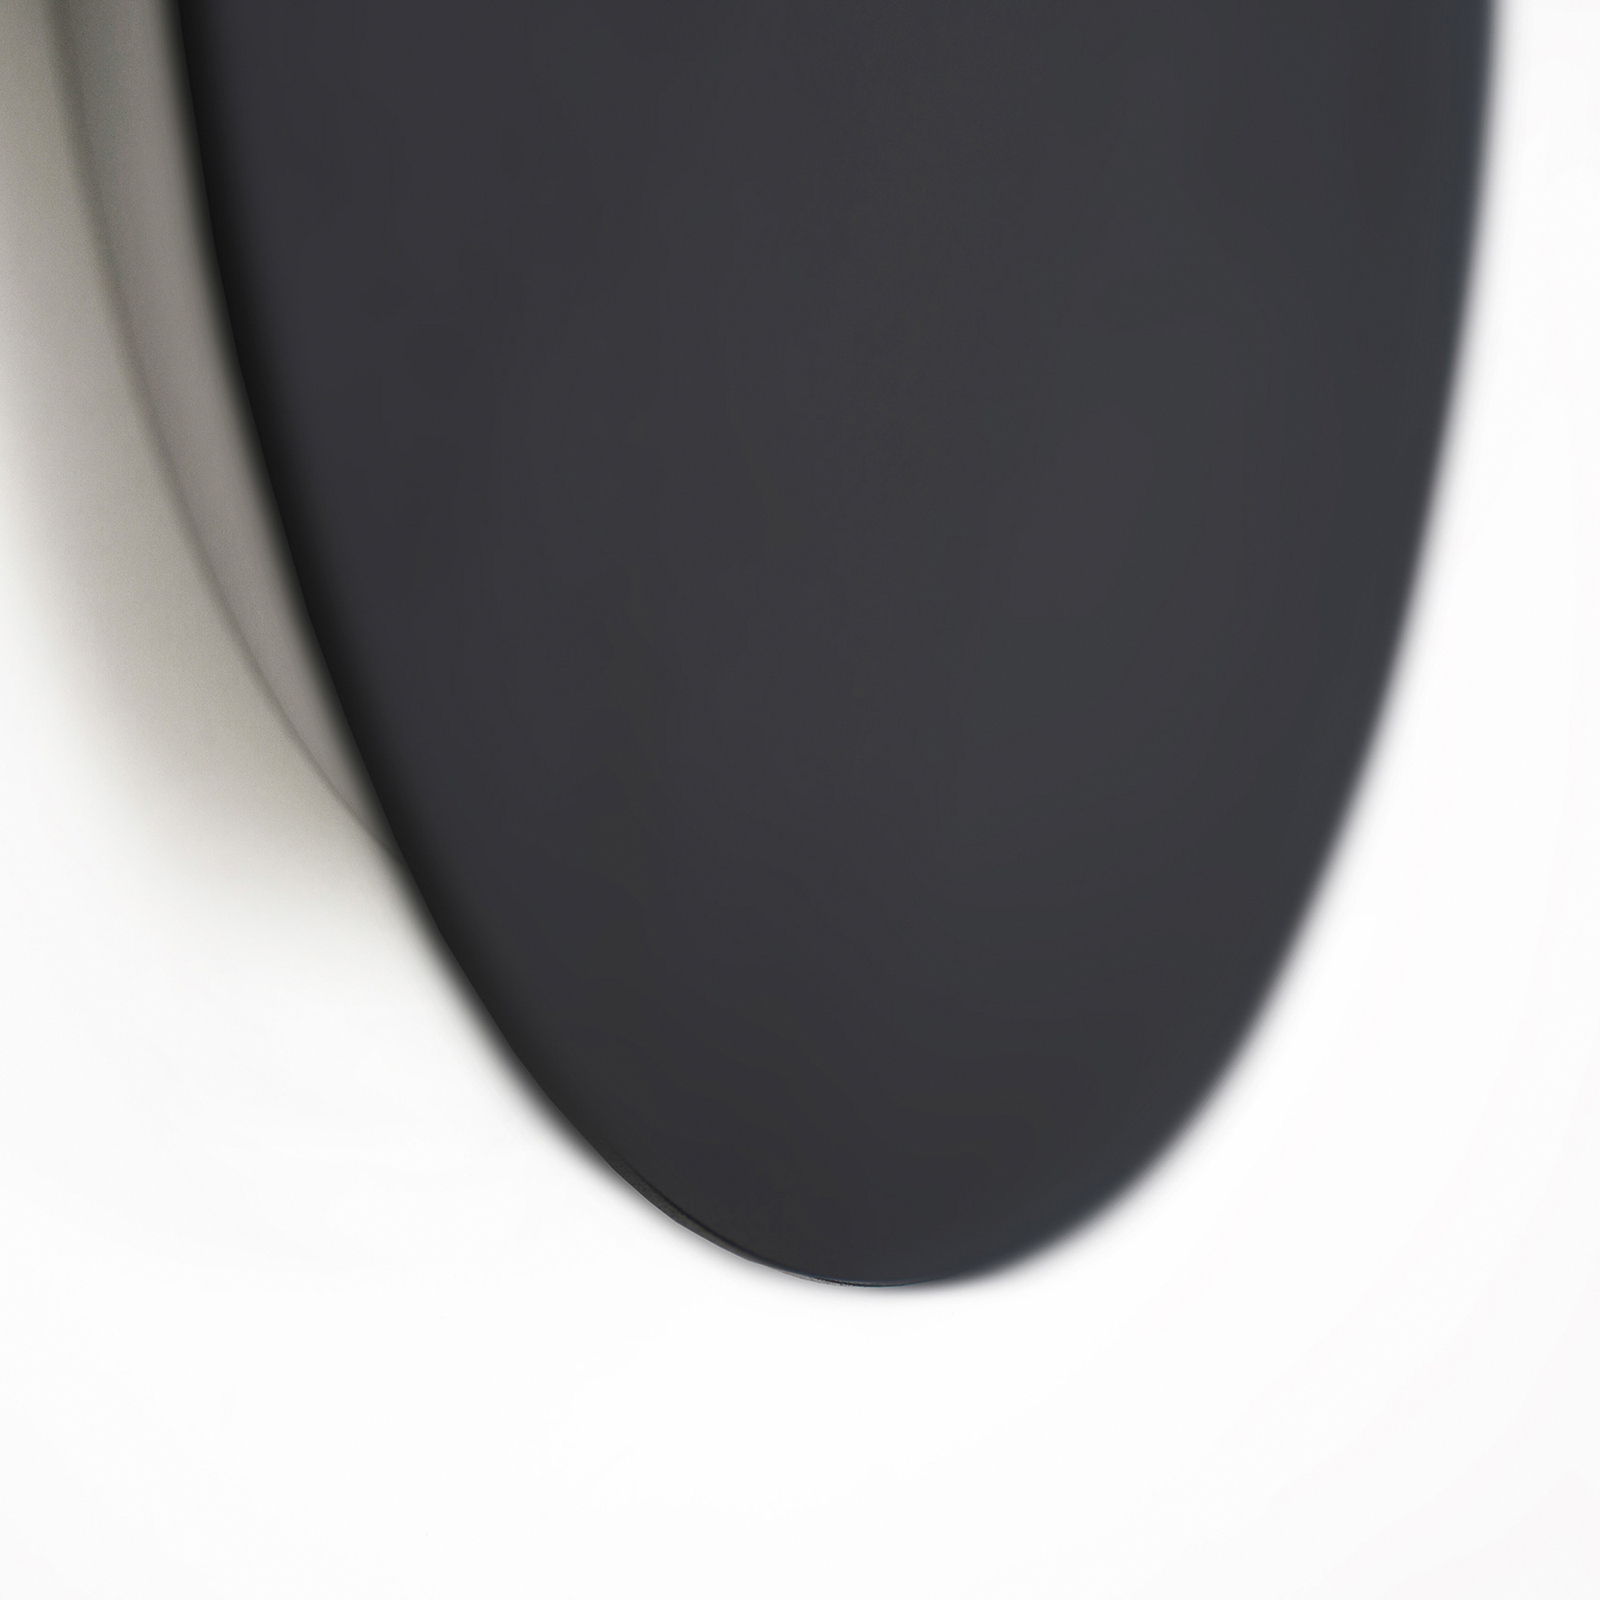 Escale Blade LED nástenné svietidlo čierne matné Ø 24 cm